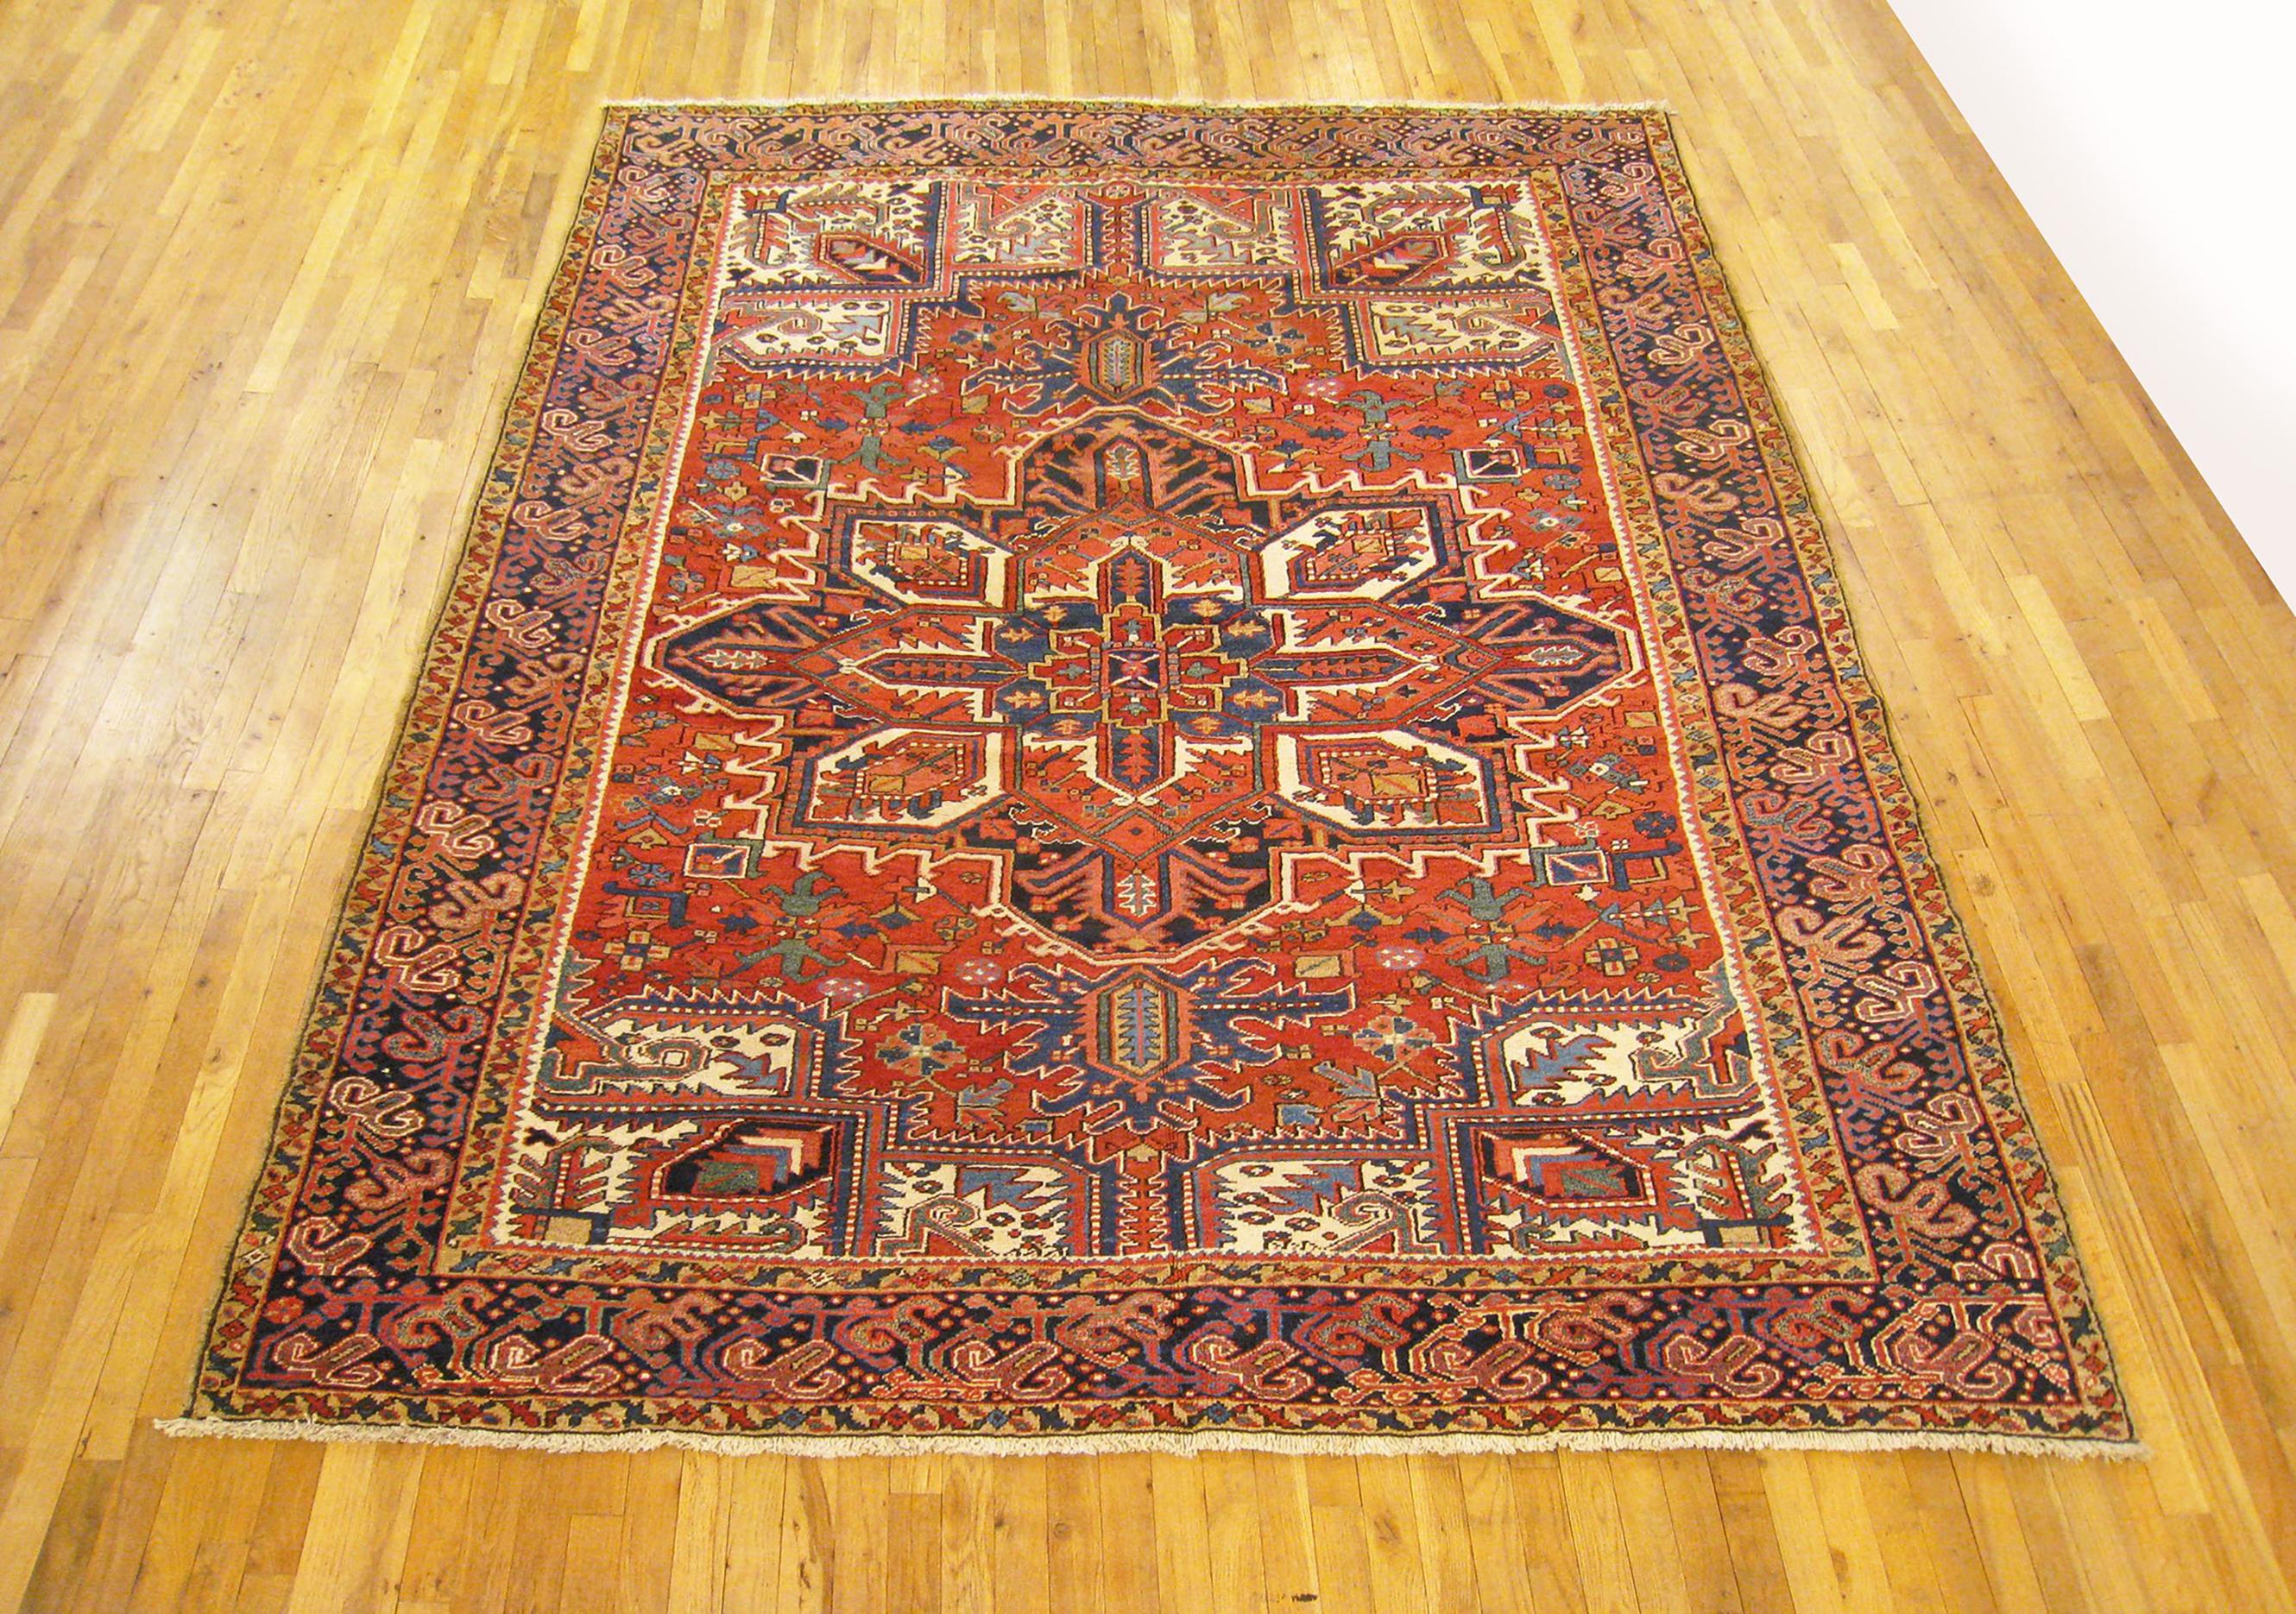 Vintage Persian Heriz Oriental rug, room size

A vintage Persian Heriz oriental rug, size 10'6